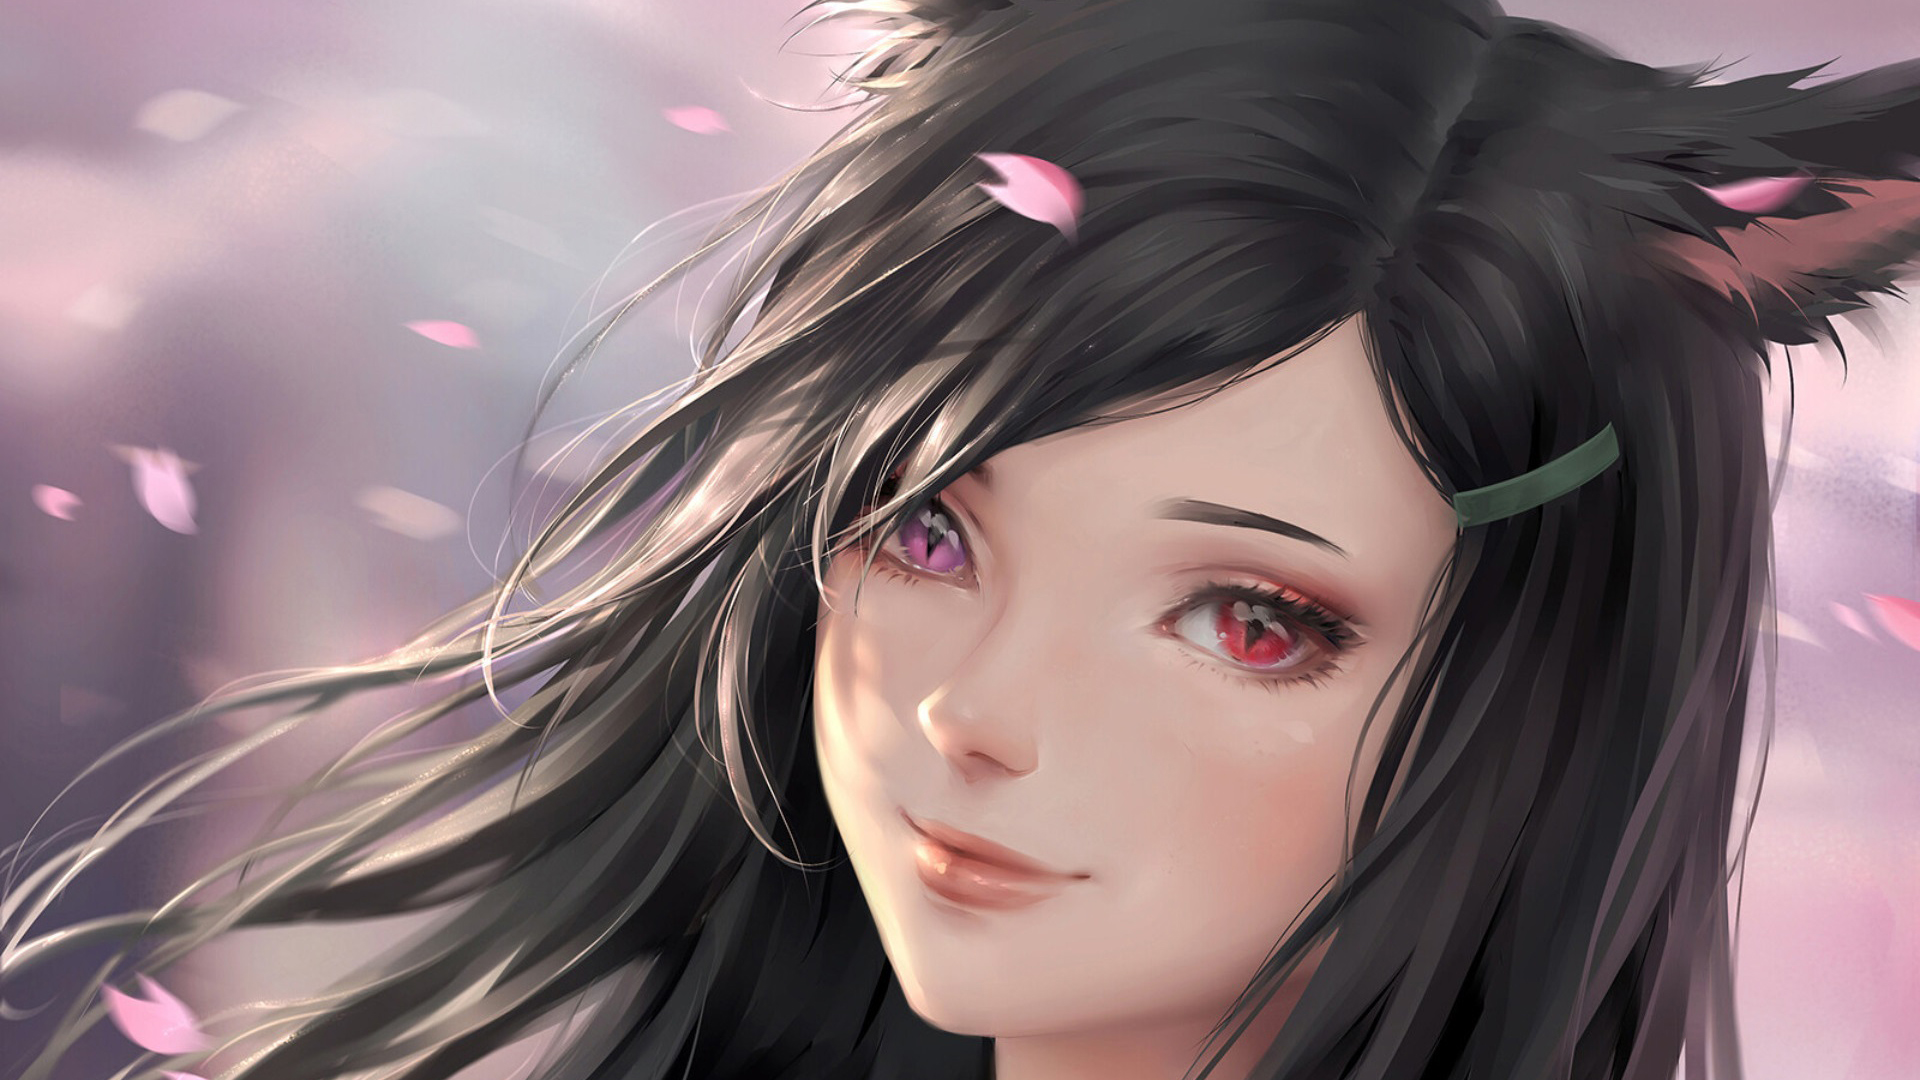 Final Fantasy XIV Girl With Black Hair With Blur Wallpaper 2K Final Fantasy XIV Games